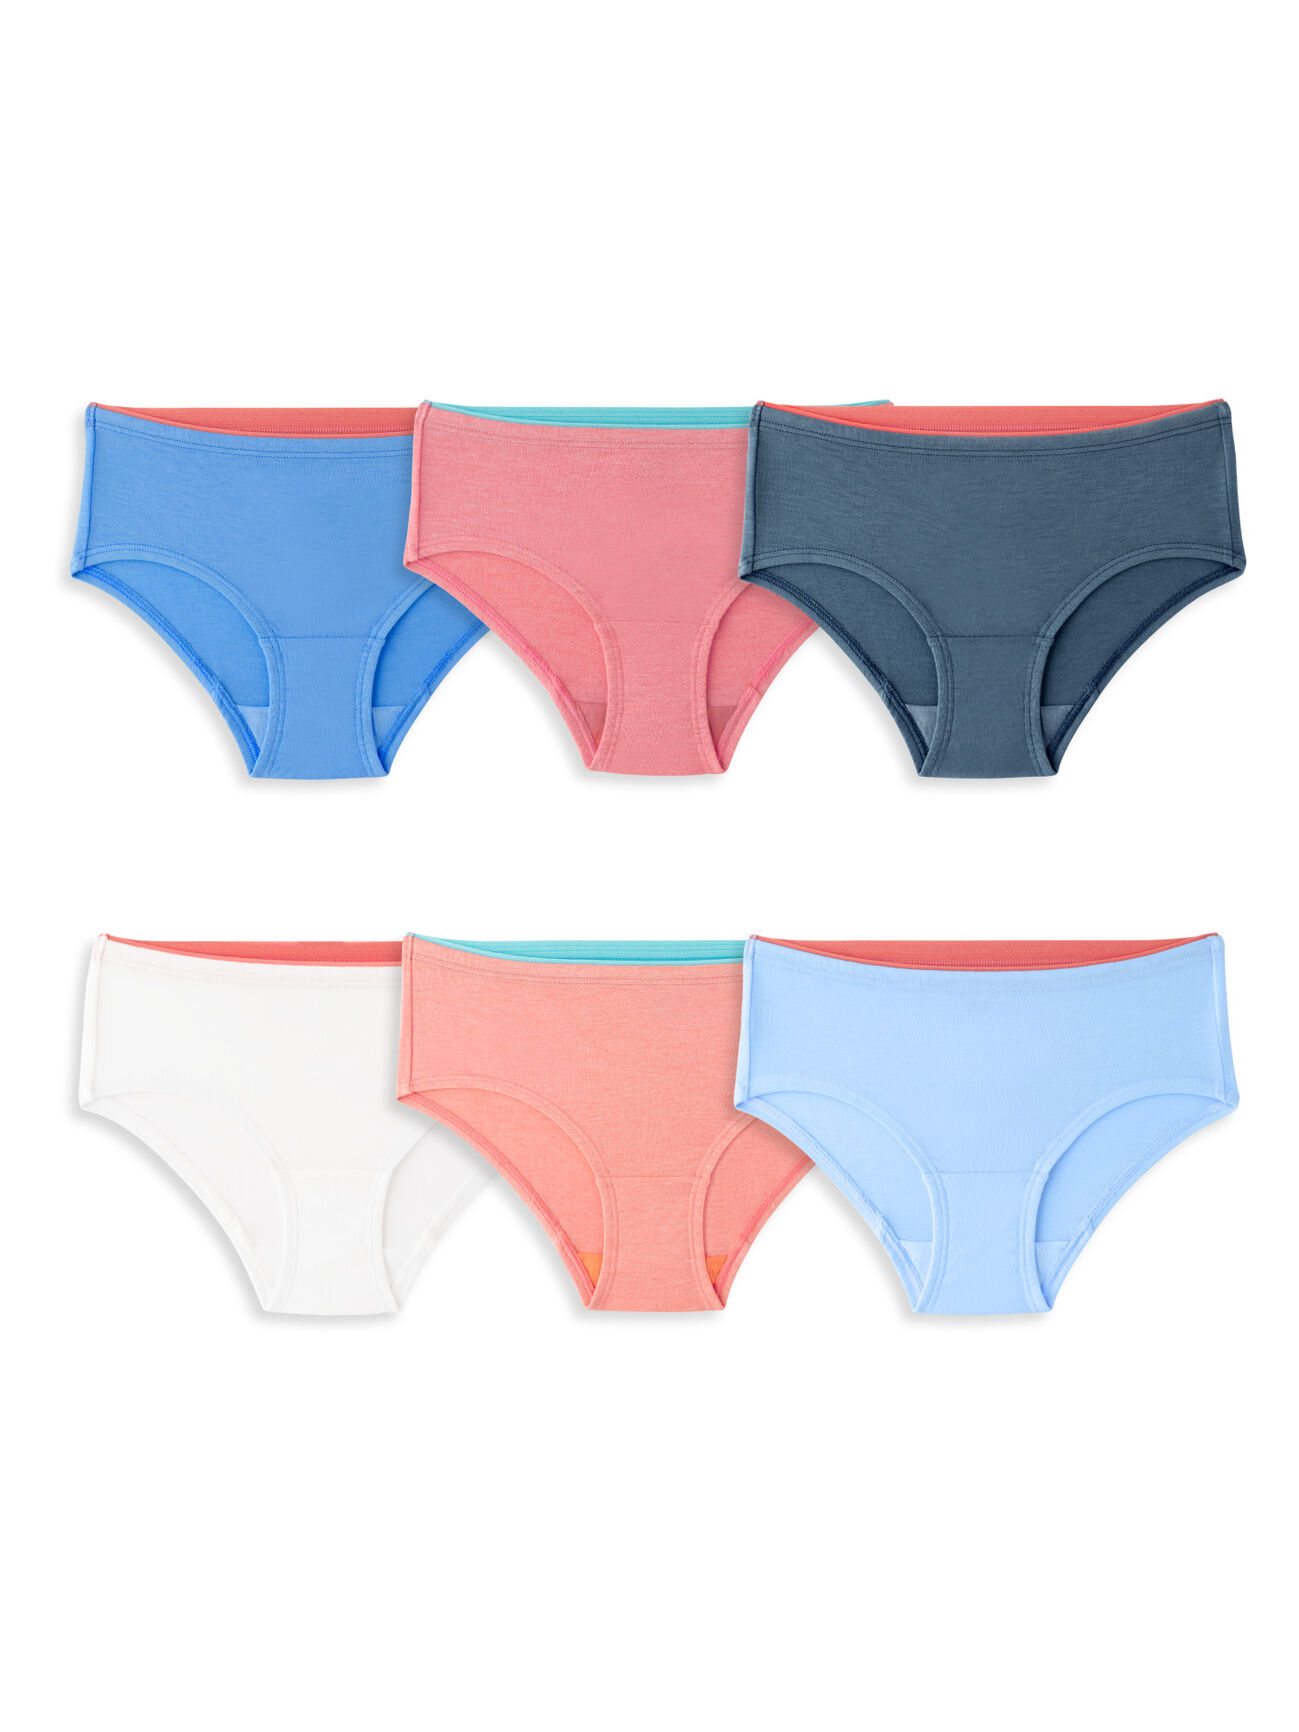 Girls' True Comfort 360 Stretch Hipster Underwear, Assorted 6 Pack Assorted